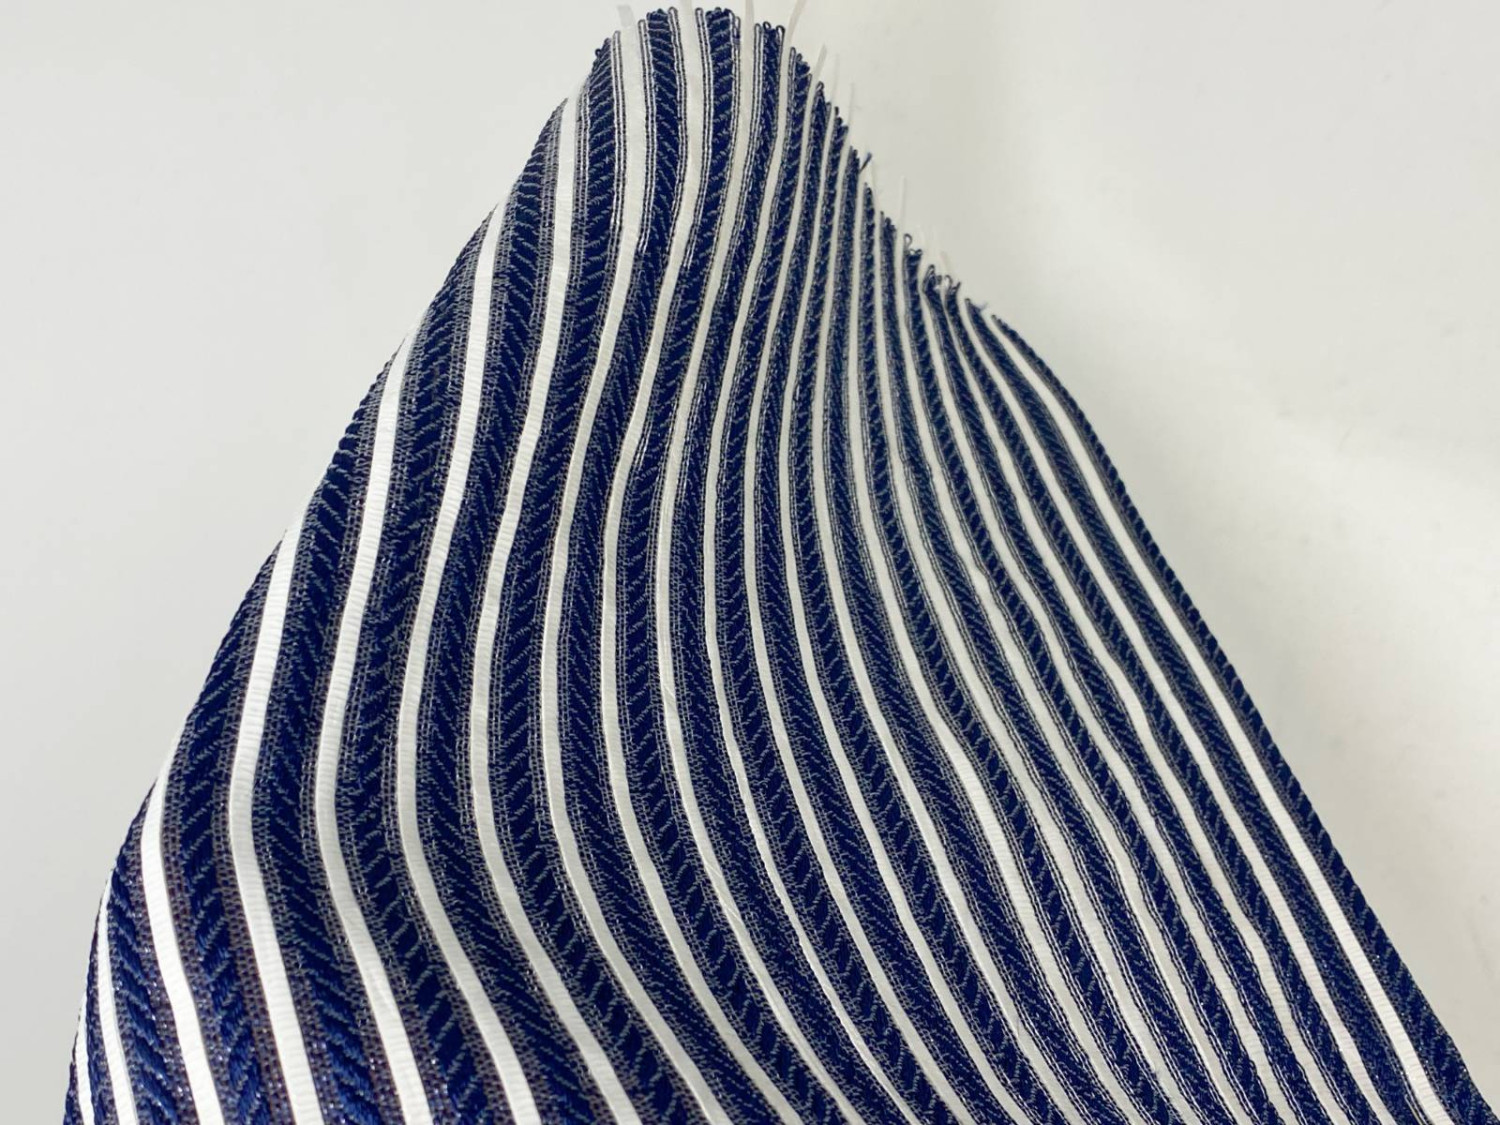 Woven striped fabric